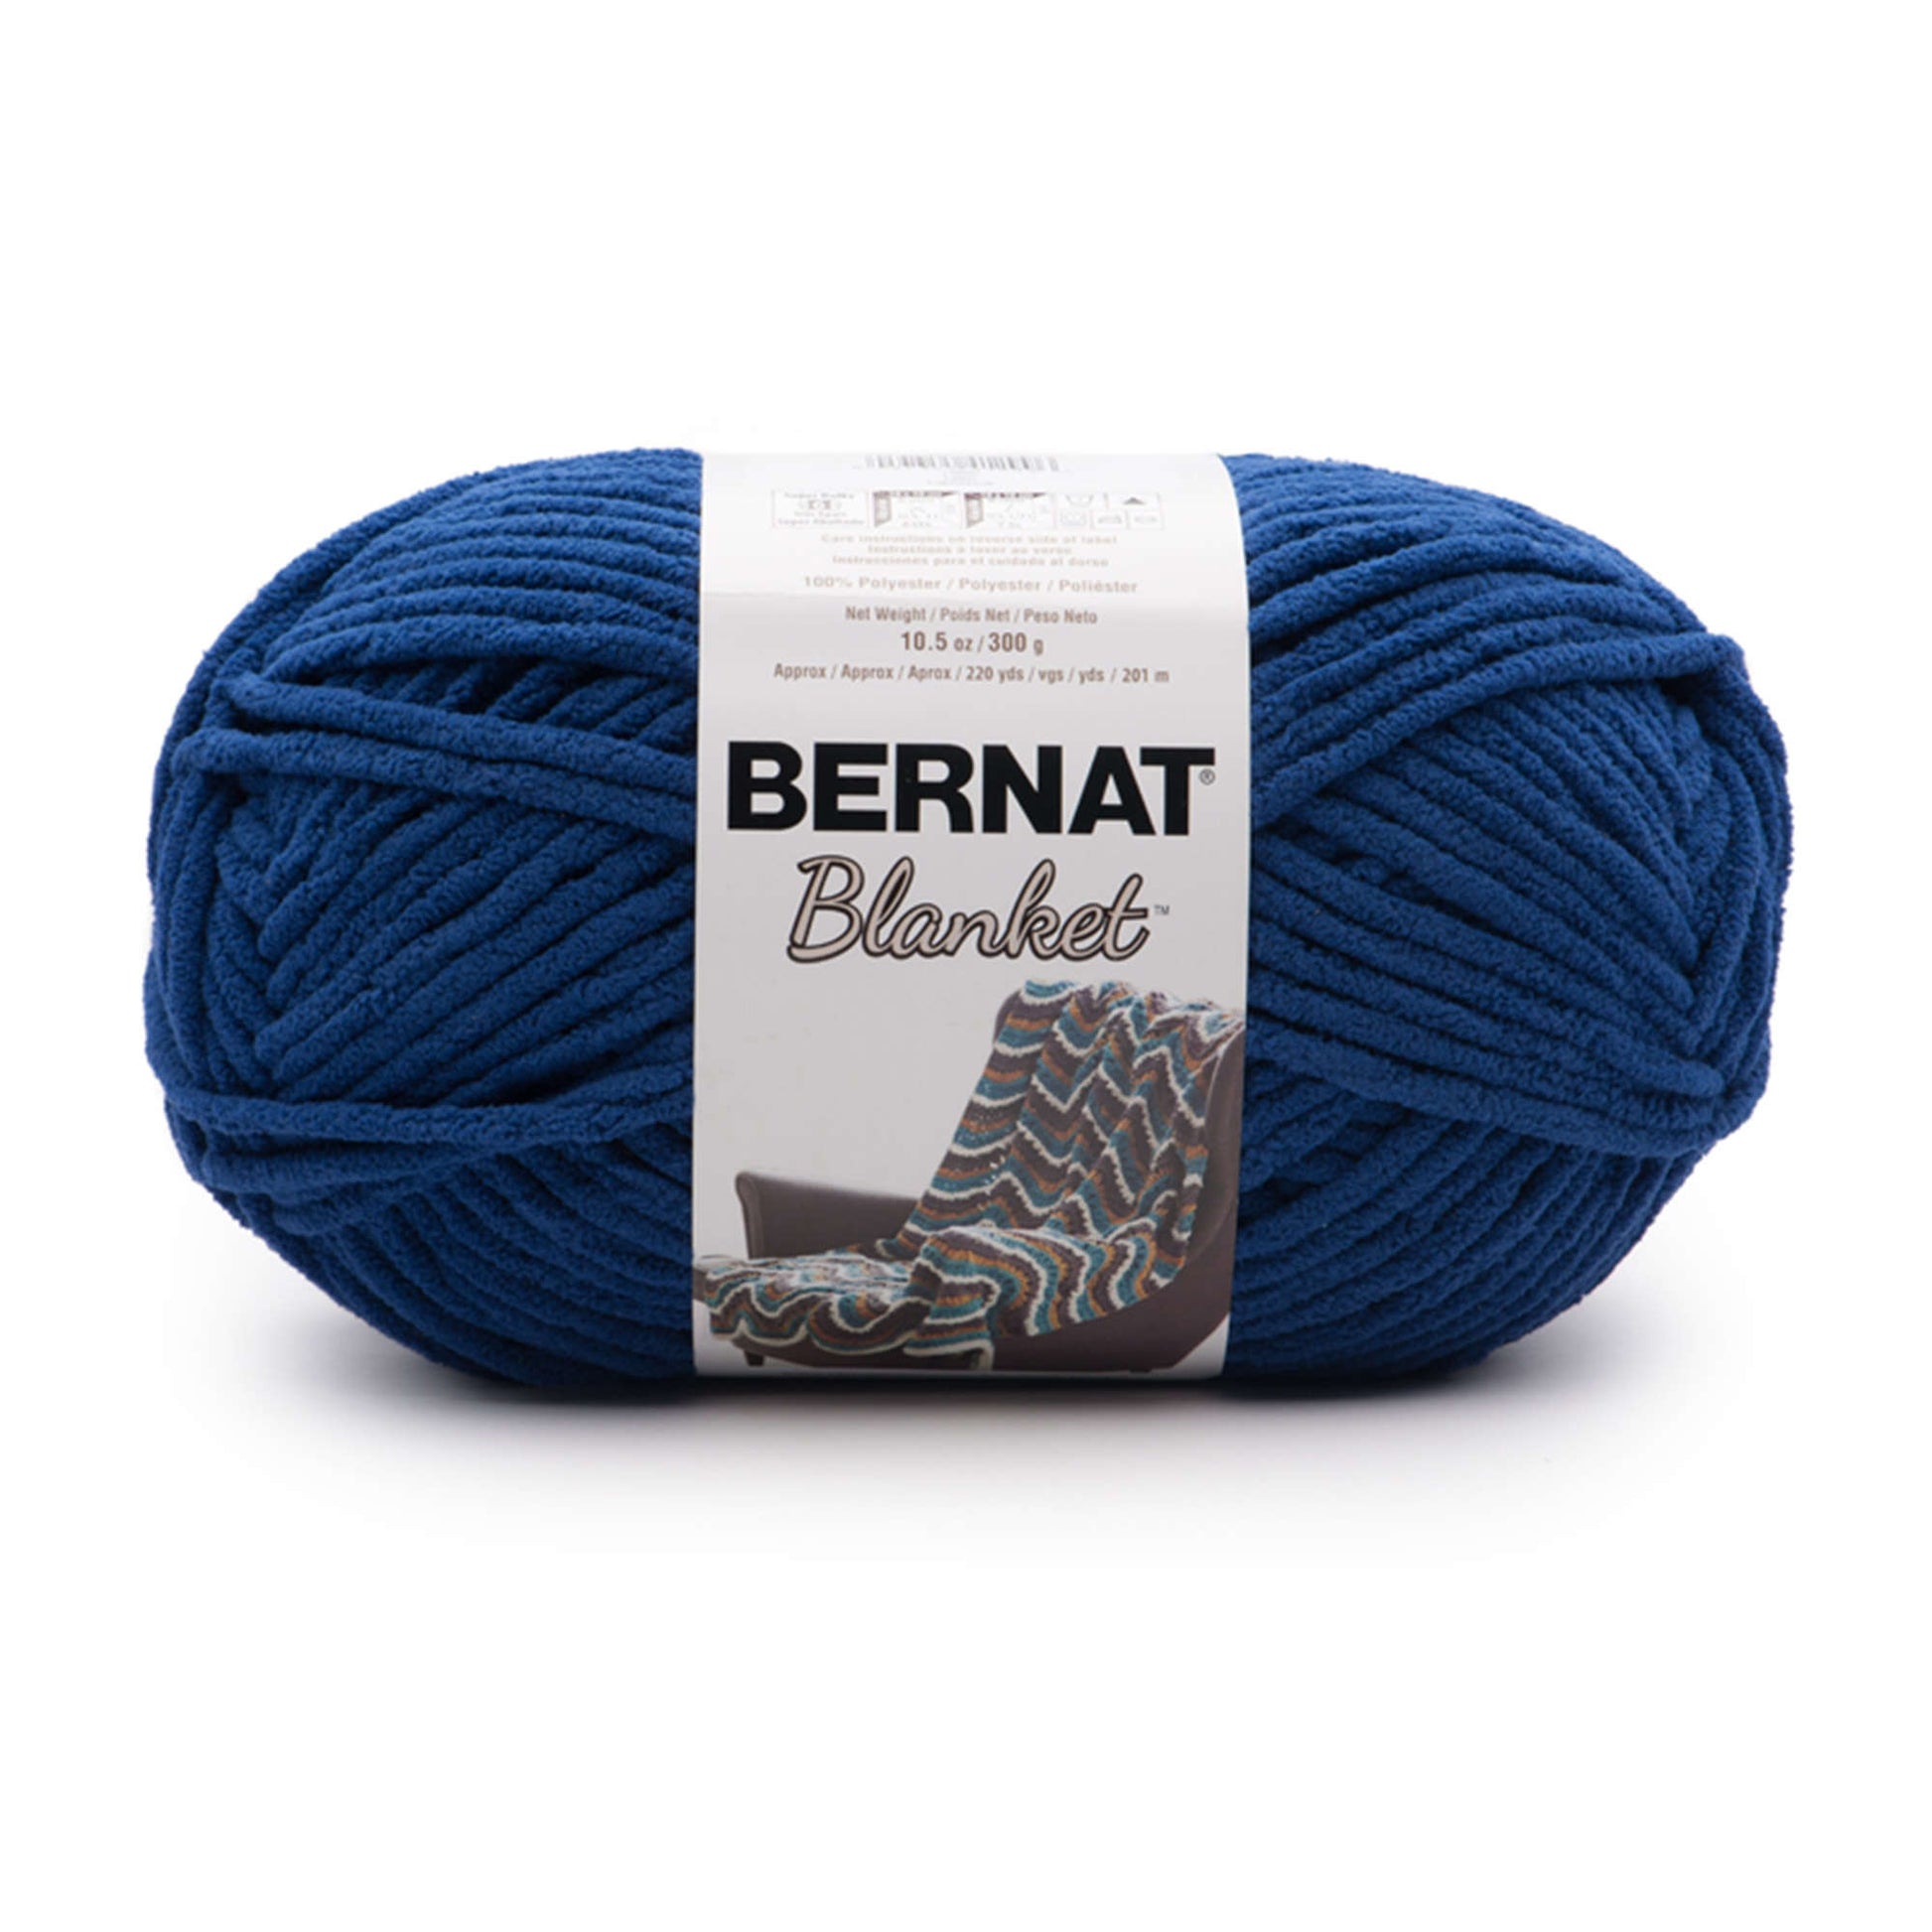 Bernat Blanket Yarn (300g/10.5oz) Lapis